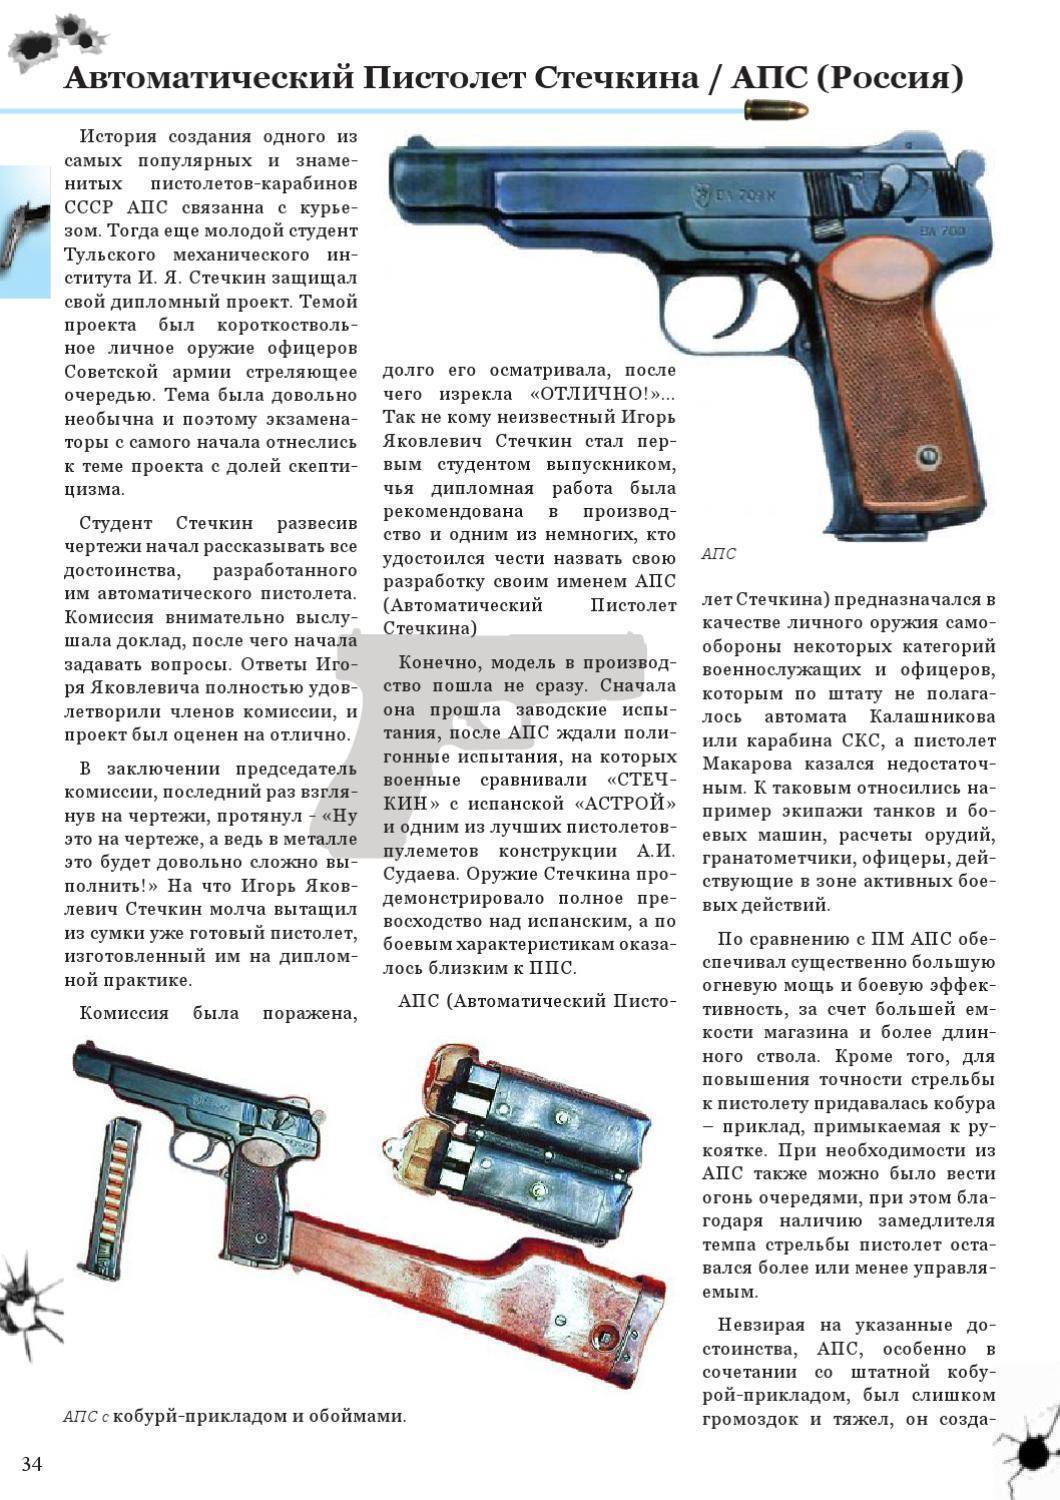 Автоматический пистолет стечкина — википедия с видео // wiki 2